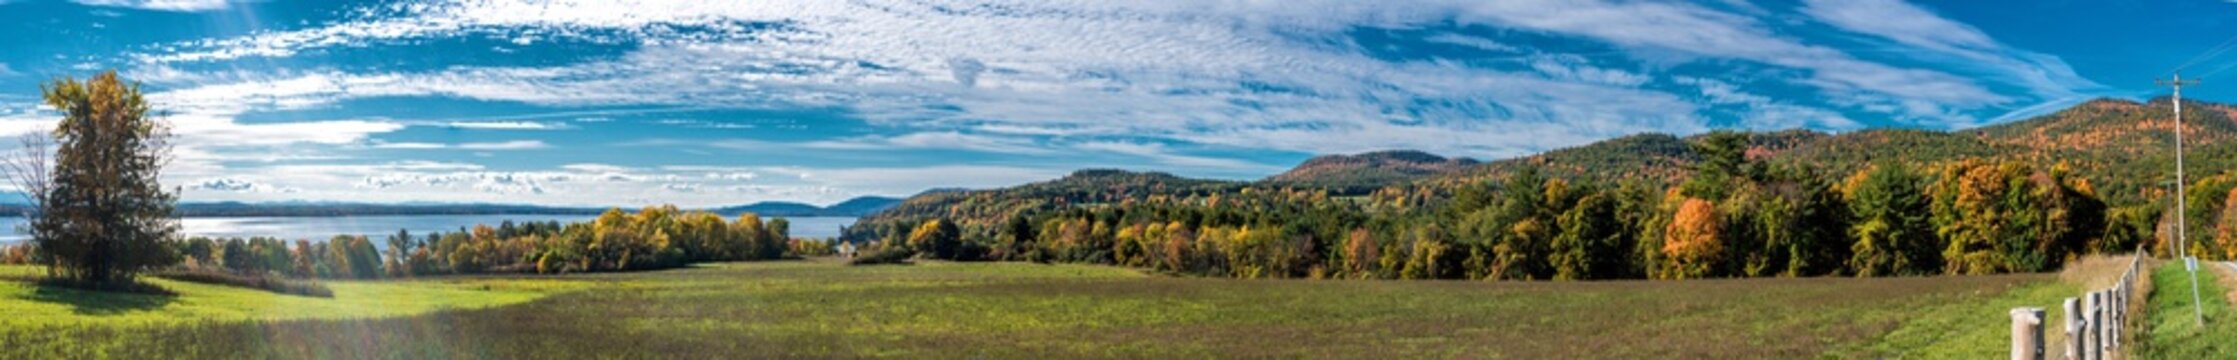 Panoramic view of an autumn scene near Lake Champlain